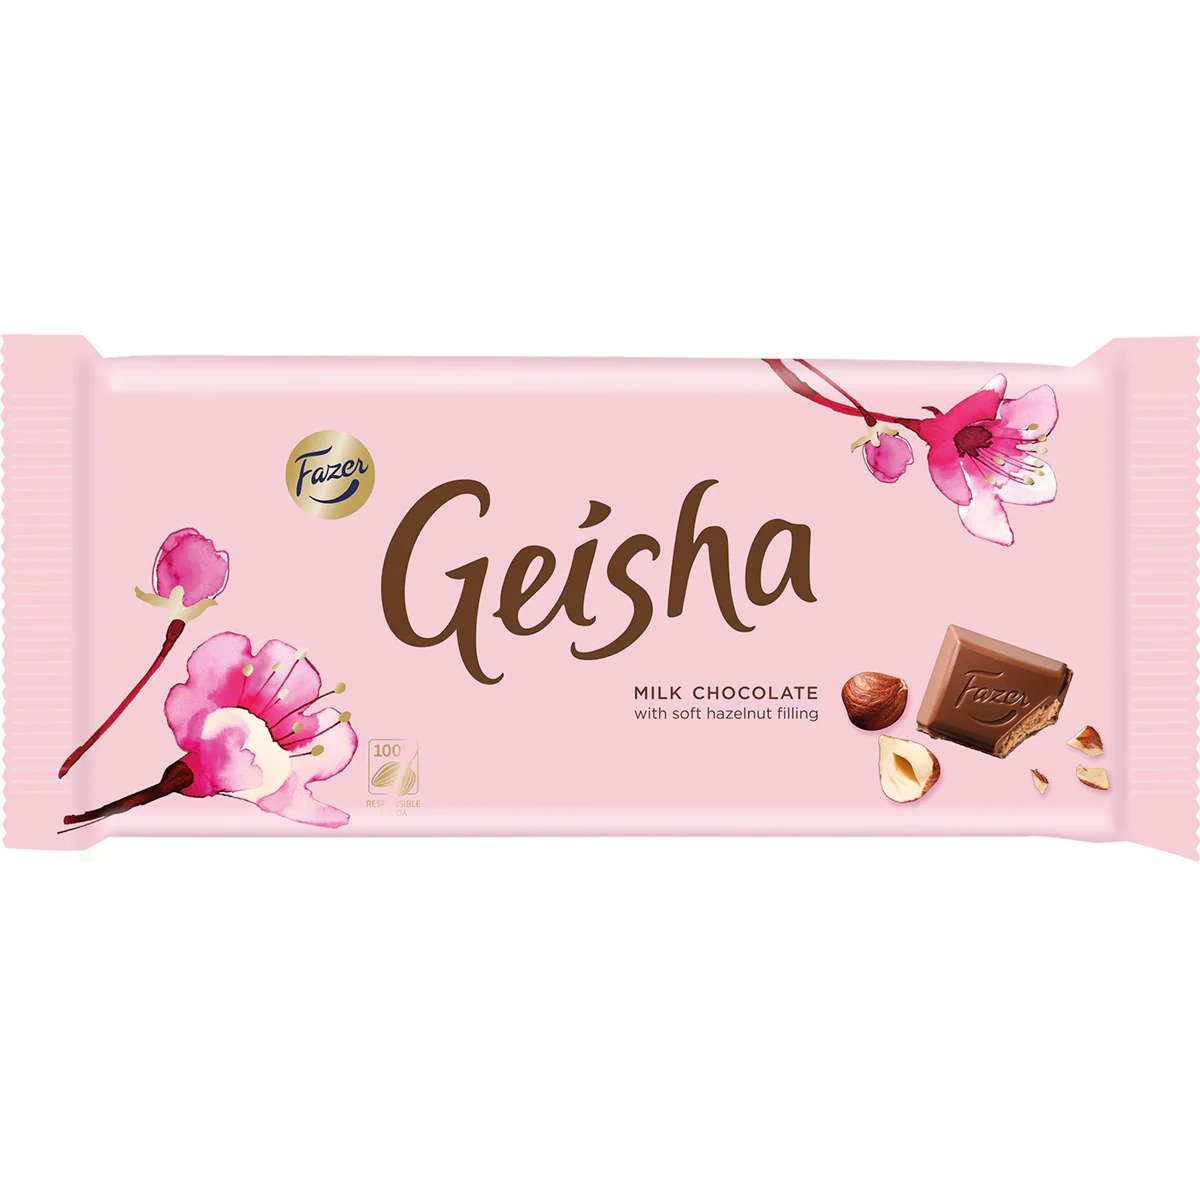 Geisha milk chocolate bar